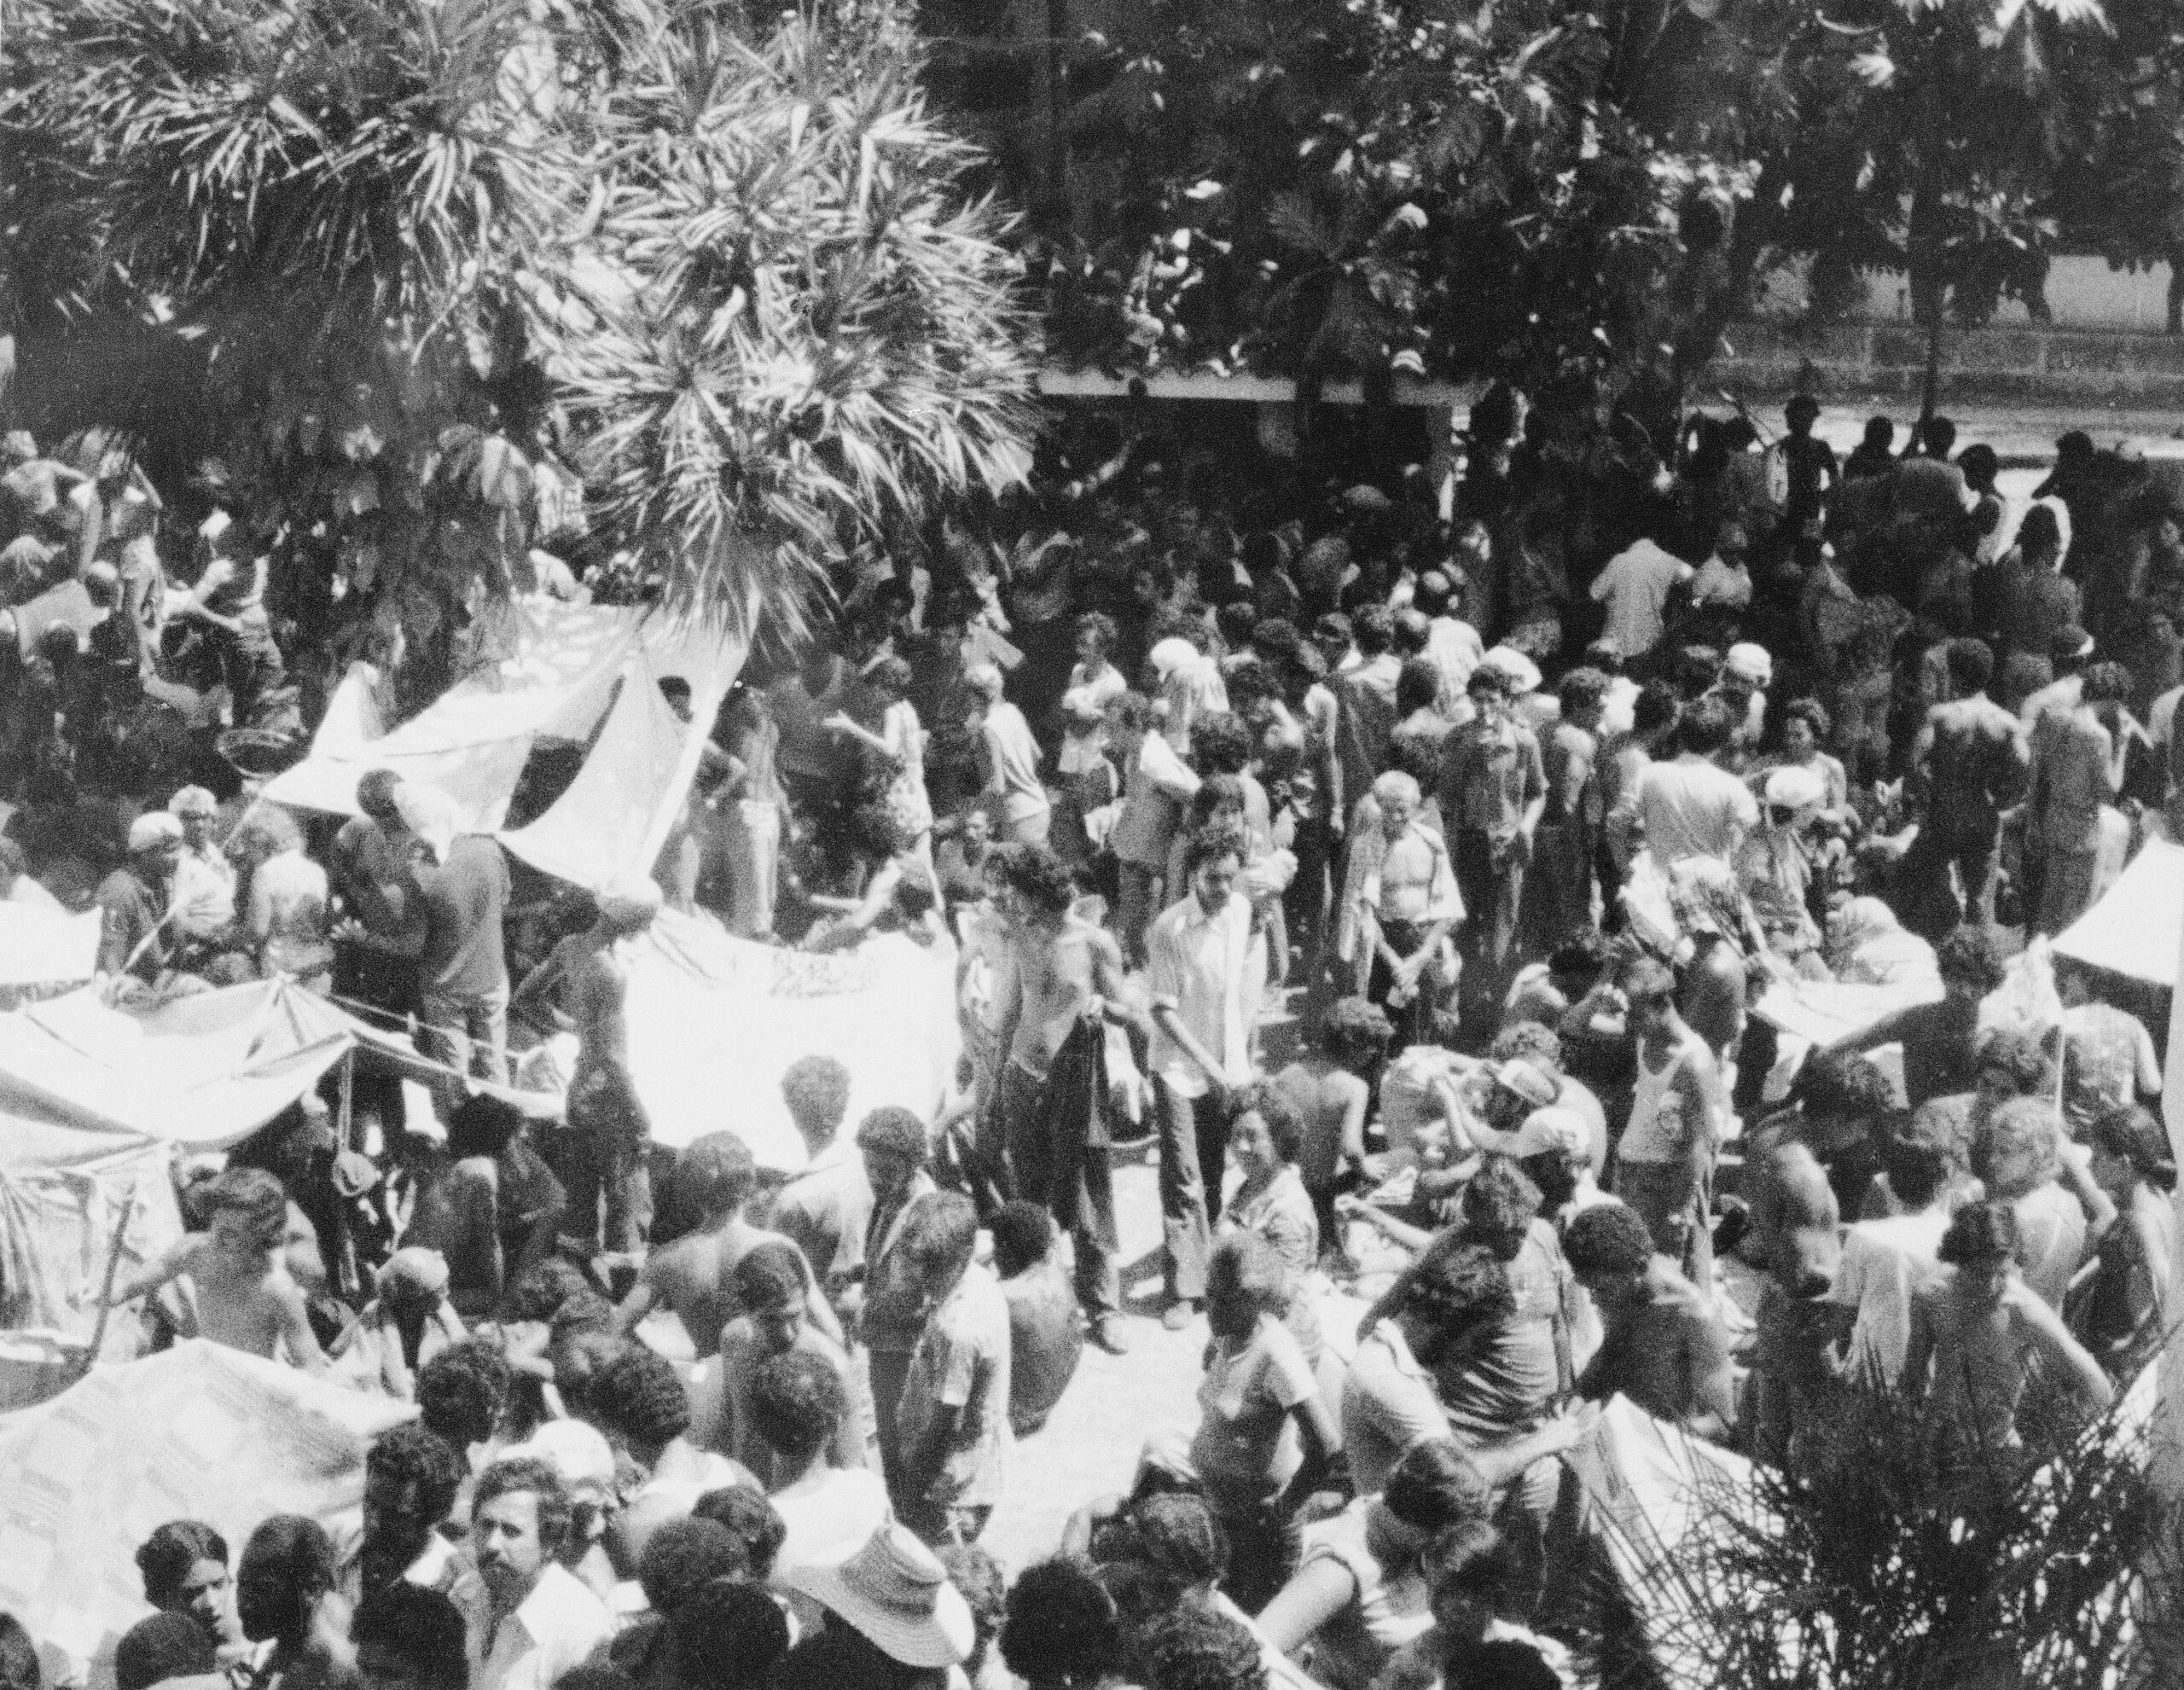 Cuban refugees inside the Peruvian Embassy compound